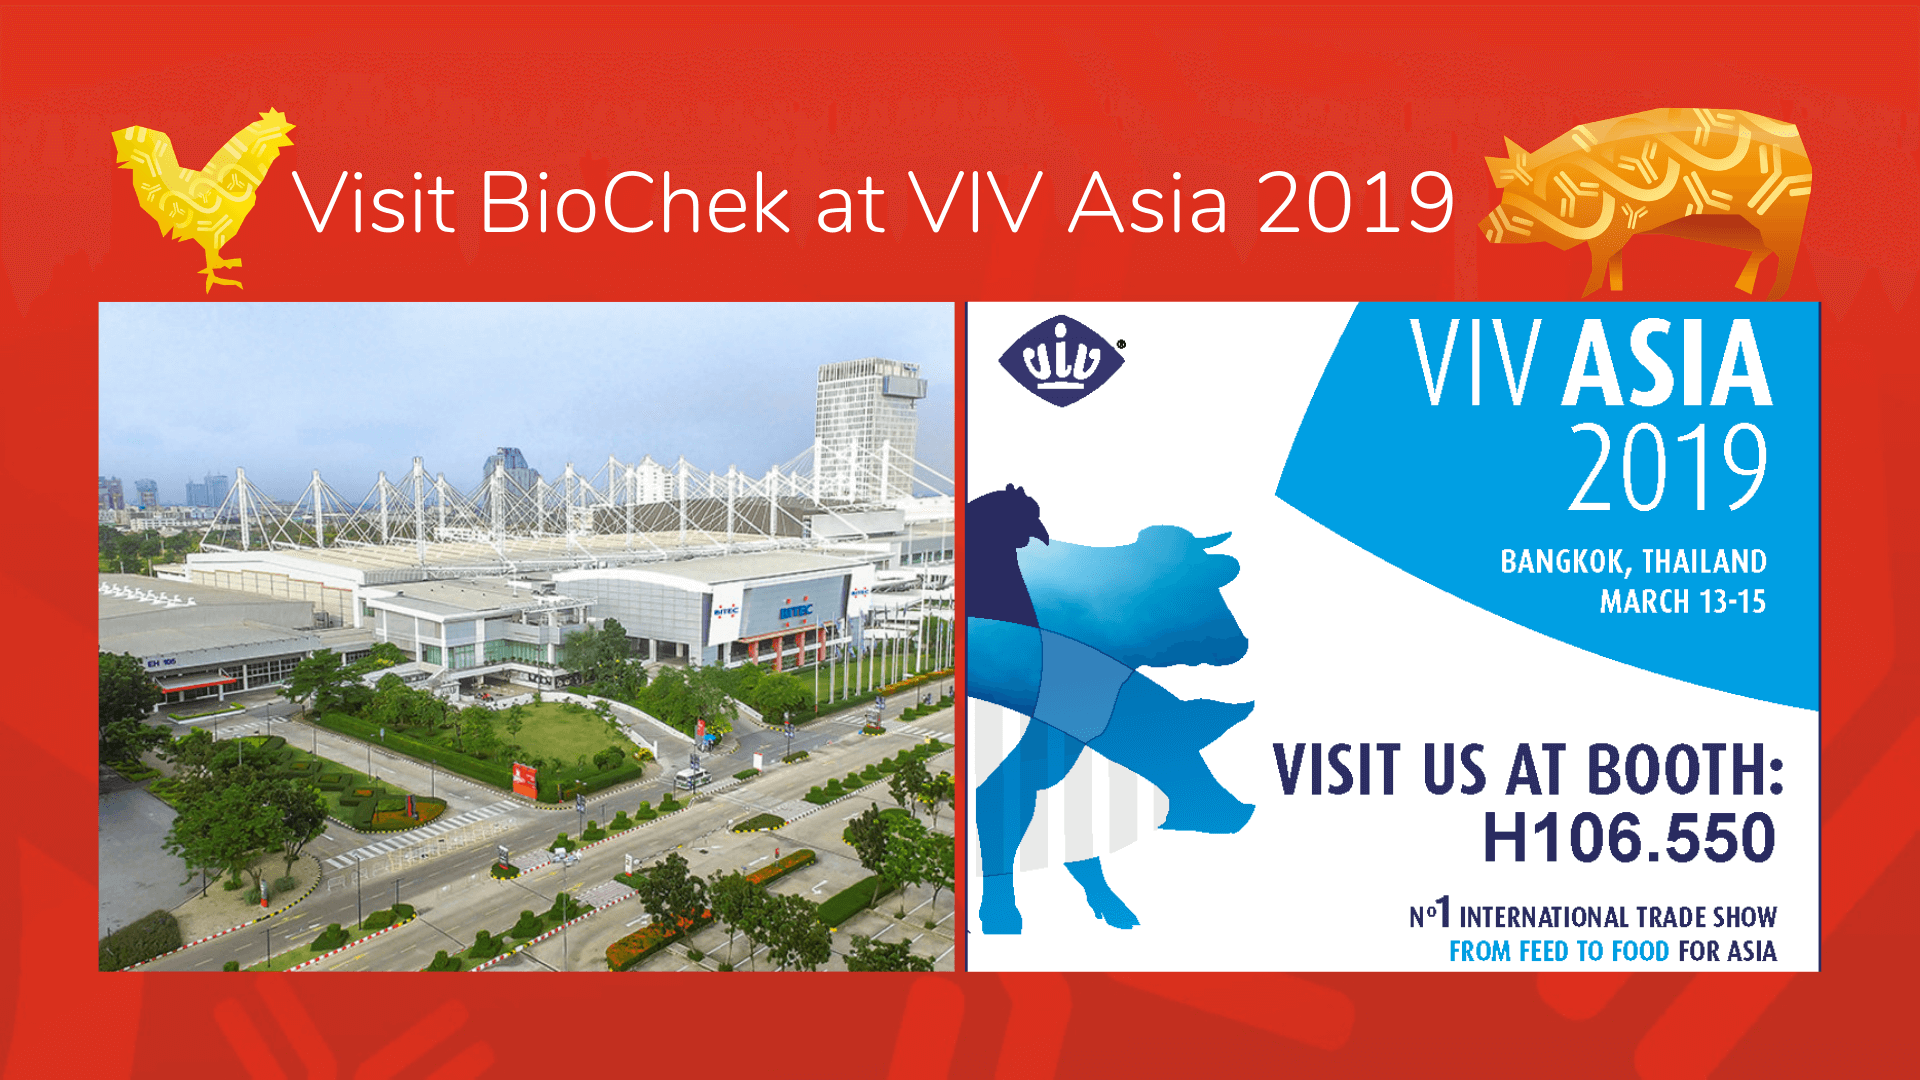 BioChek was present at VIV Asia